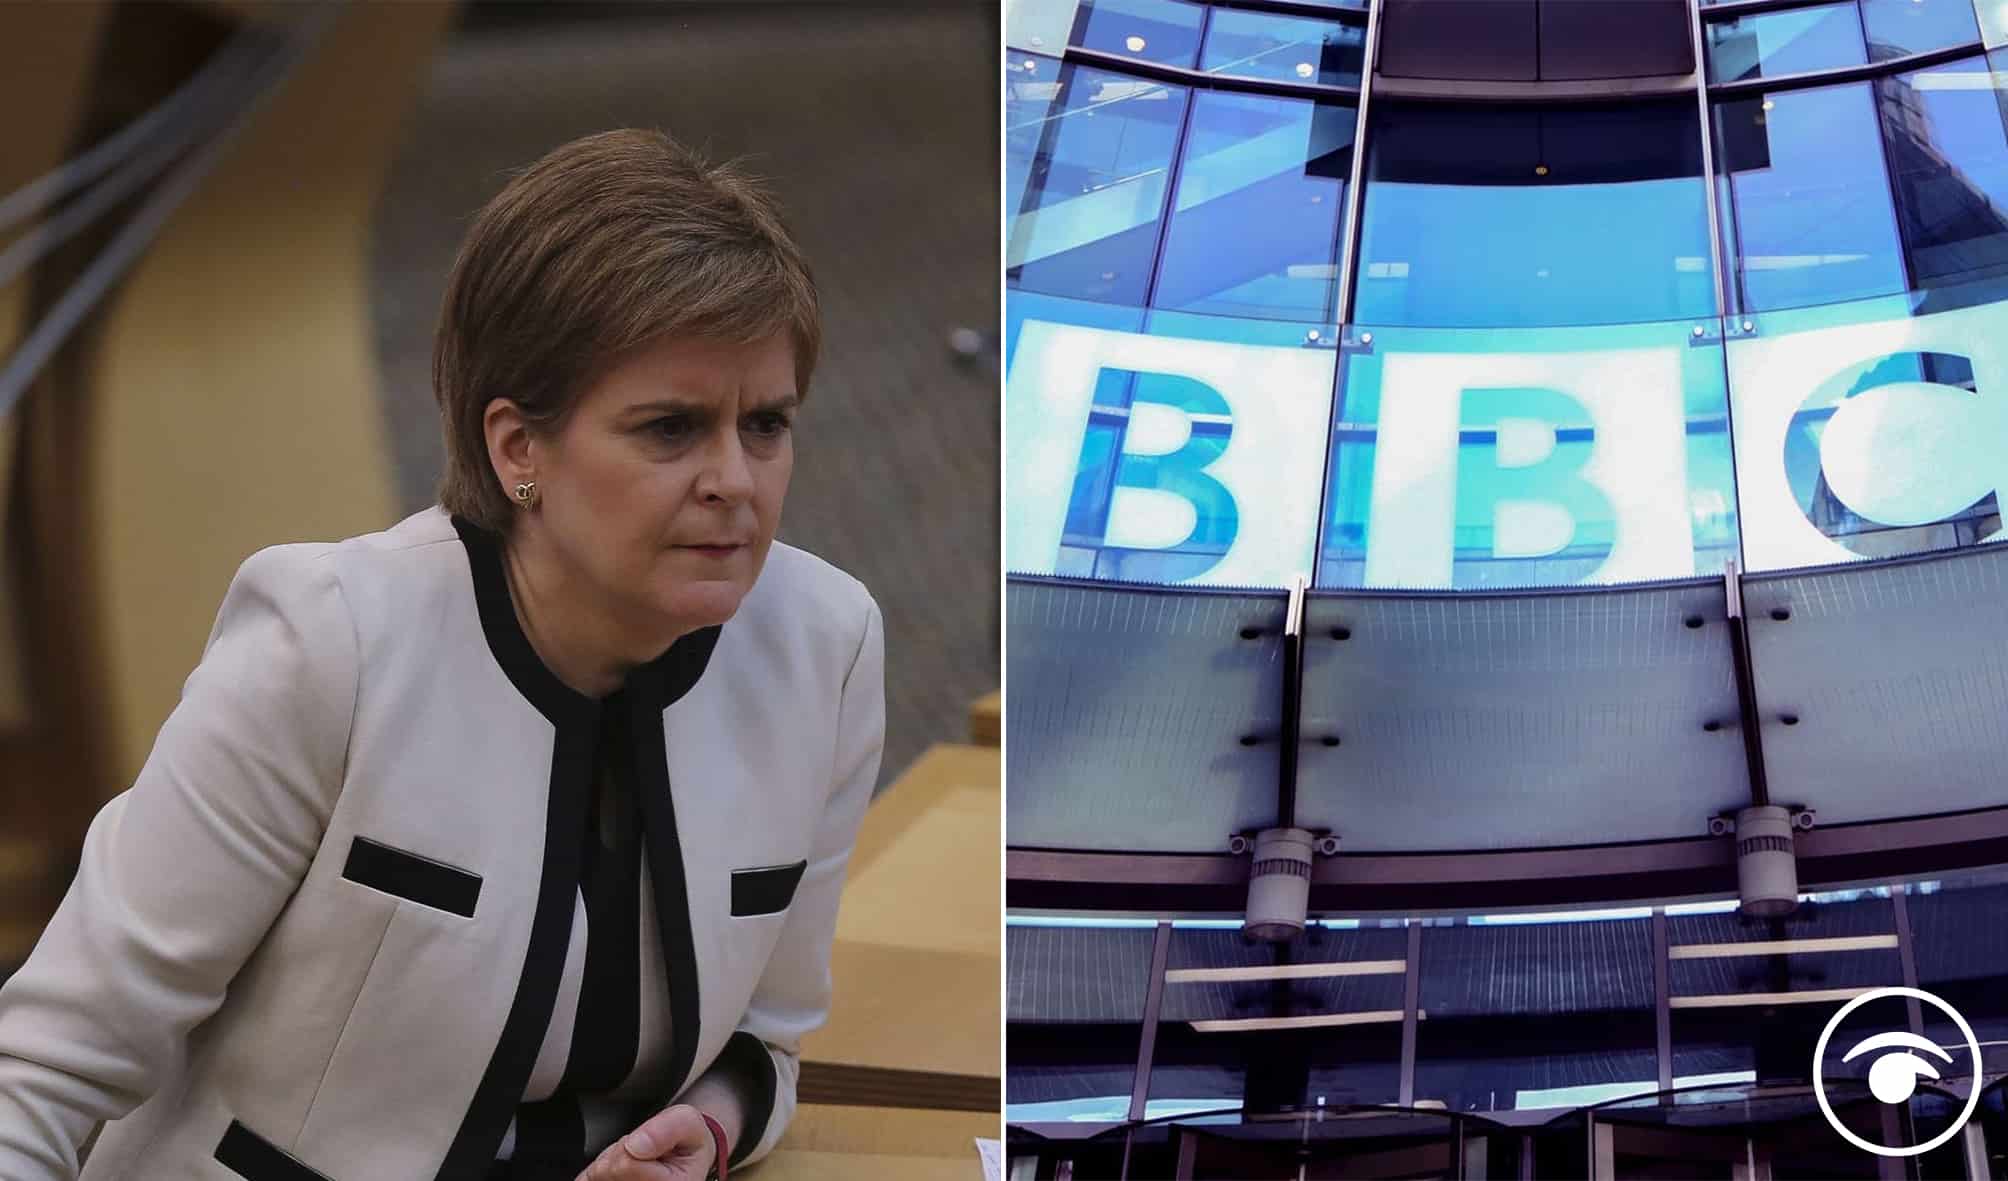 Reactions as BBC apologise about misleading headline regarding Sturgeon